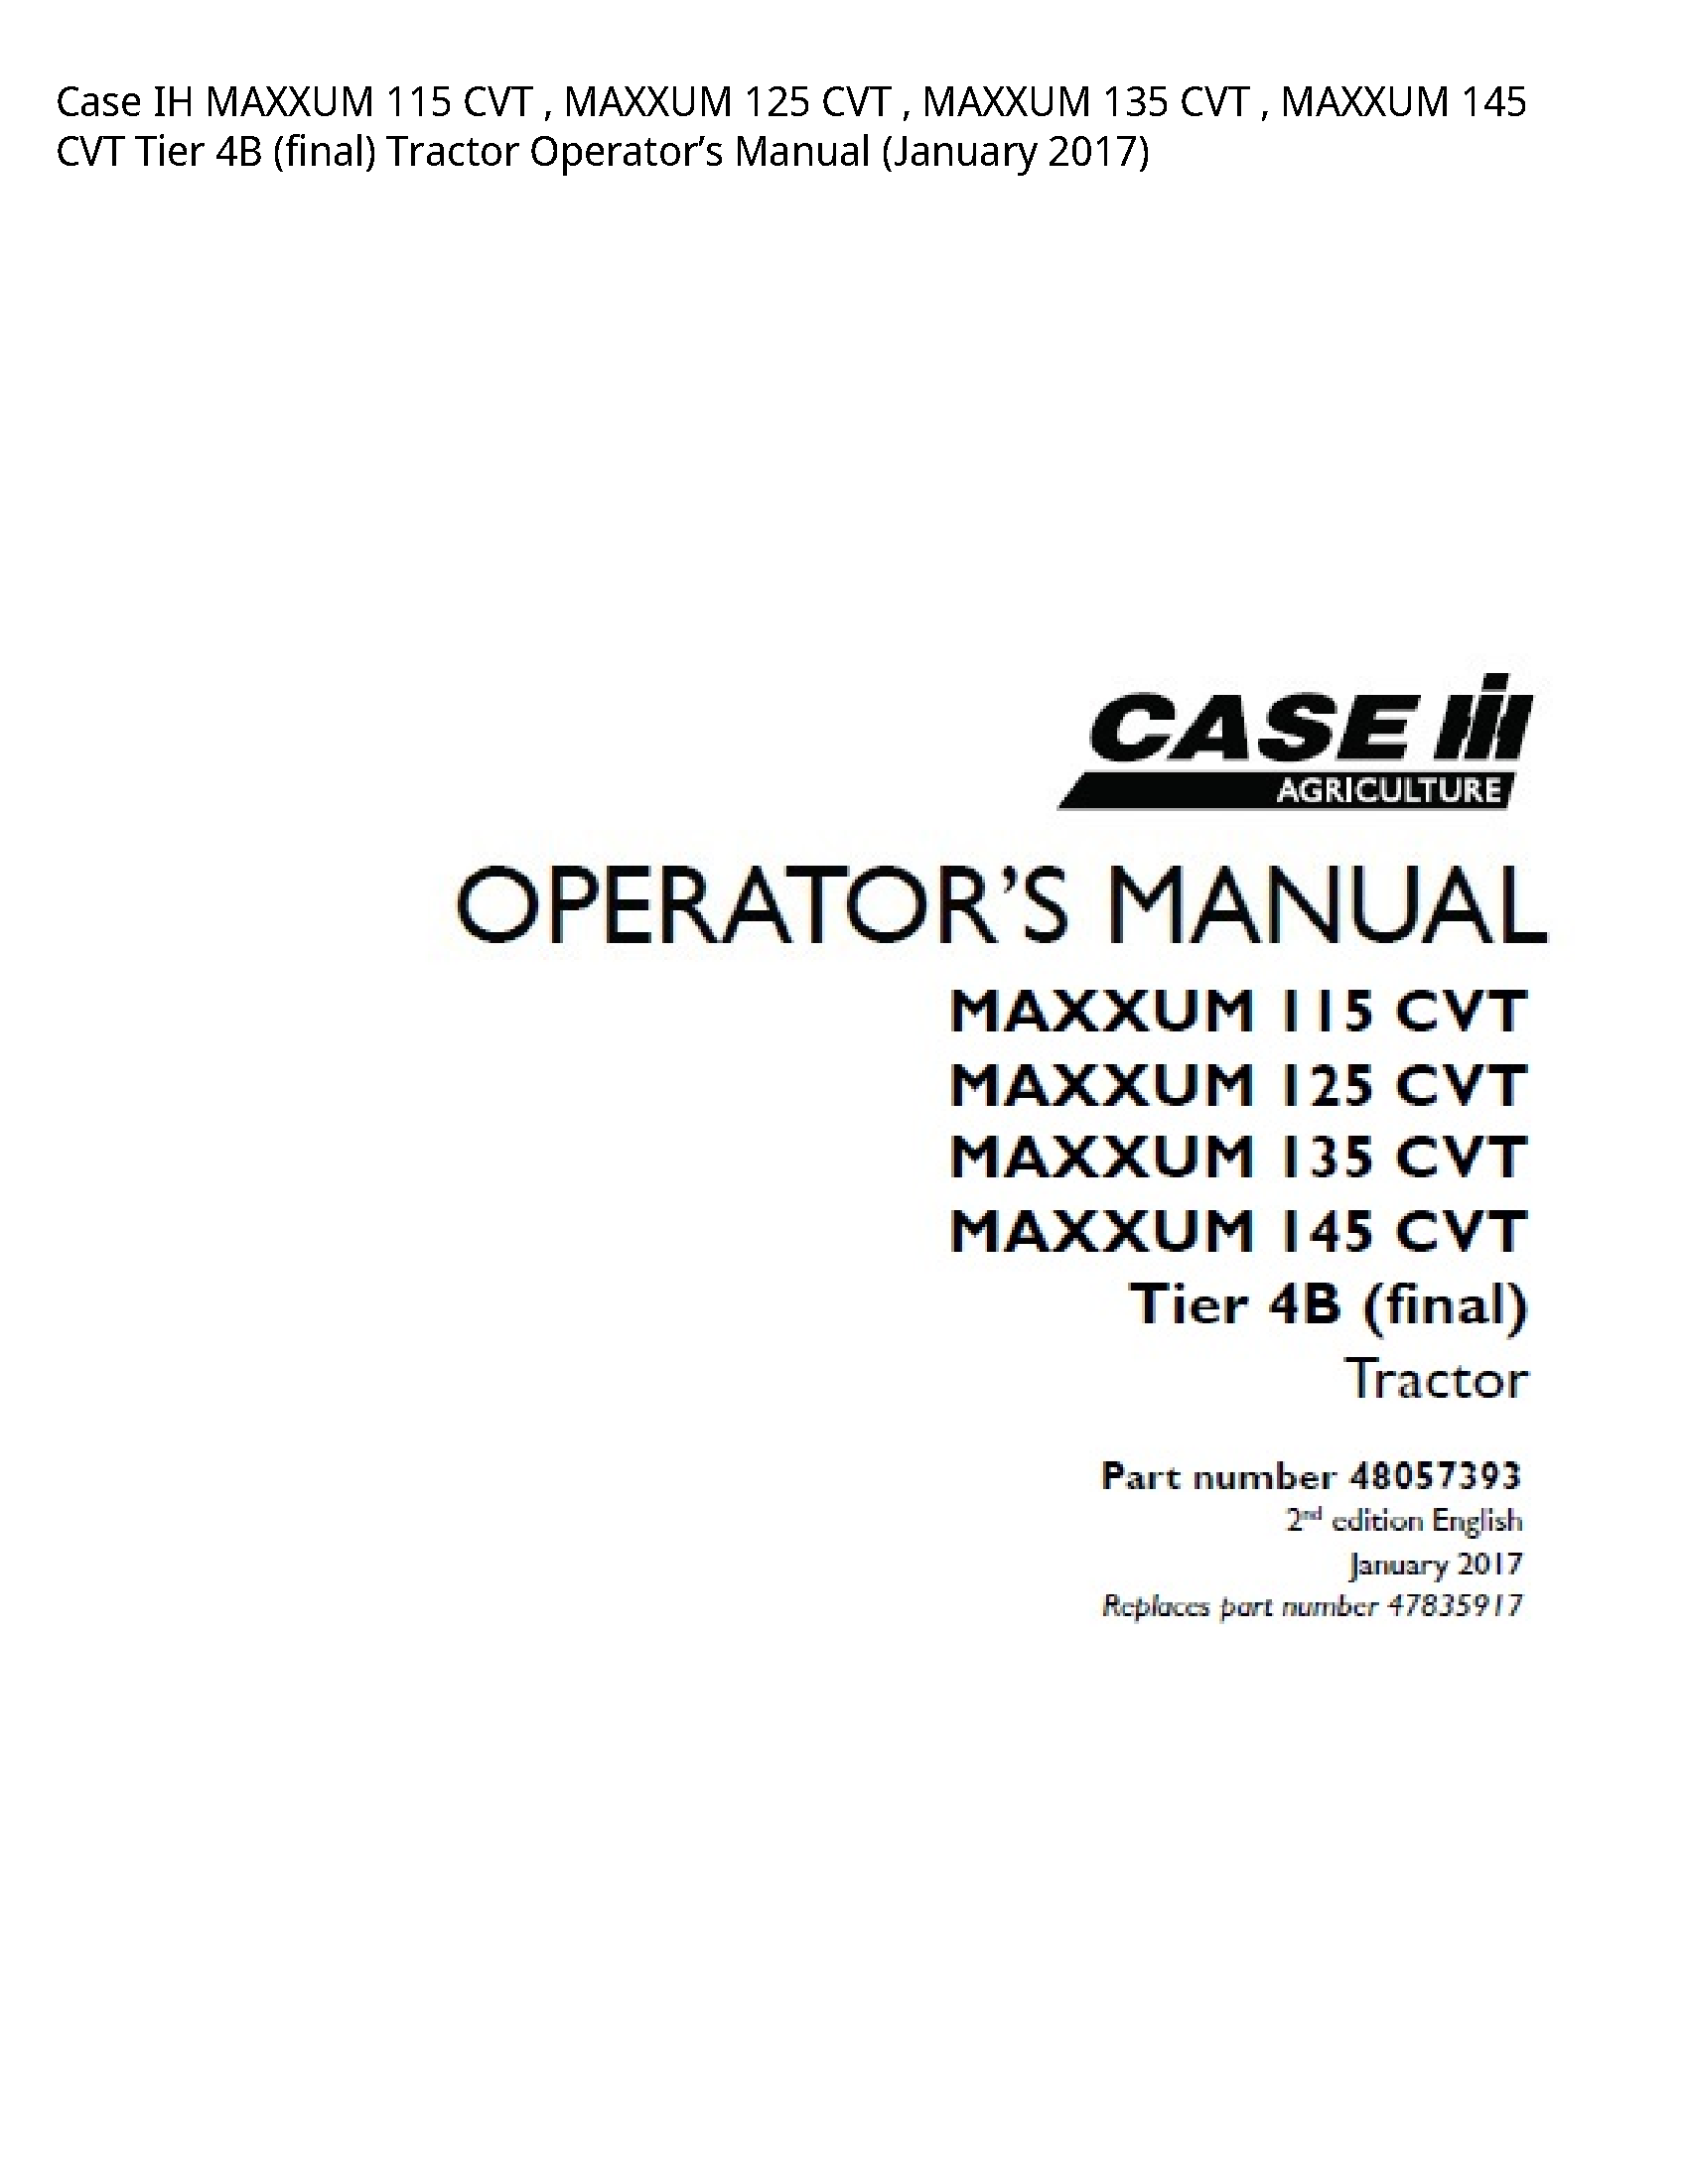 Case/Case IH 115 IH MAXXUM CVT MAXXUM CVT MAXXUM CVT MAXXUM CVT Tier (final) Tractor Operator’s manual